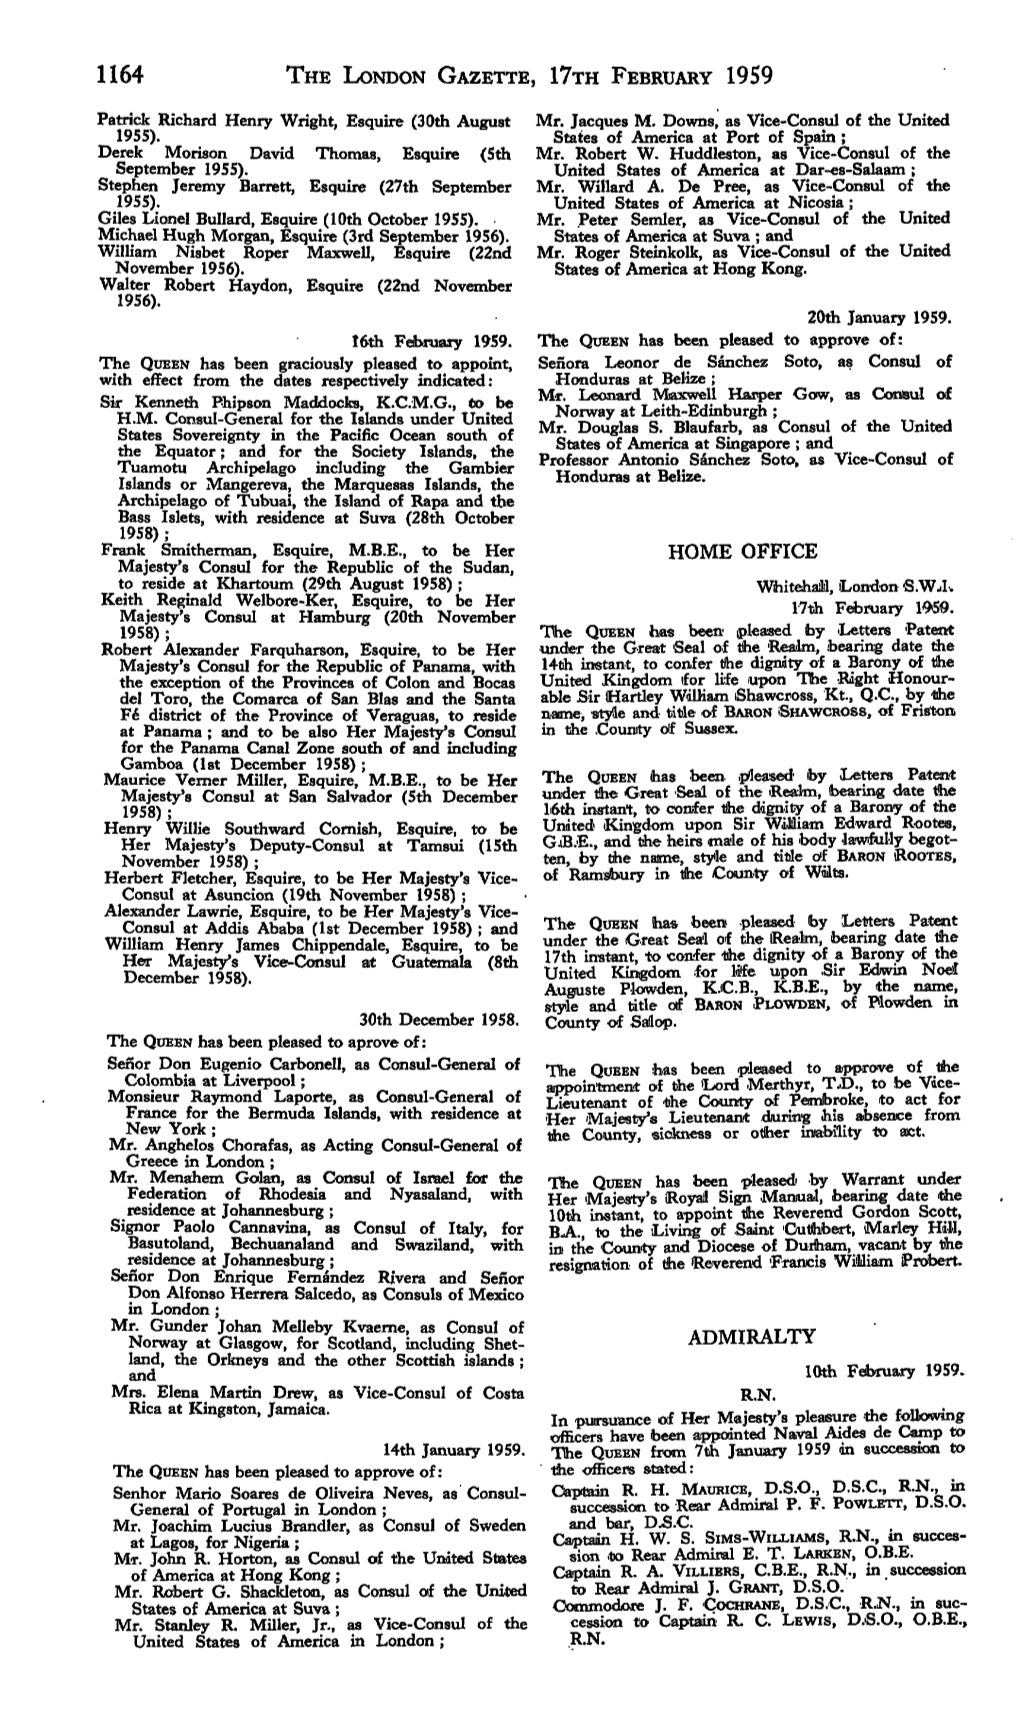 1164 the London Gazette, I?Th February 1959